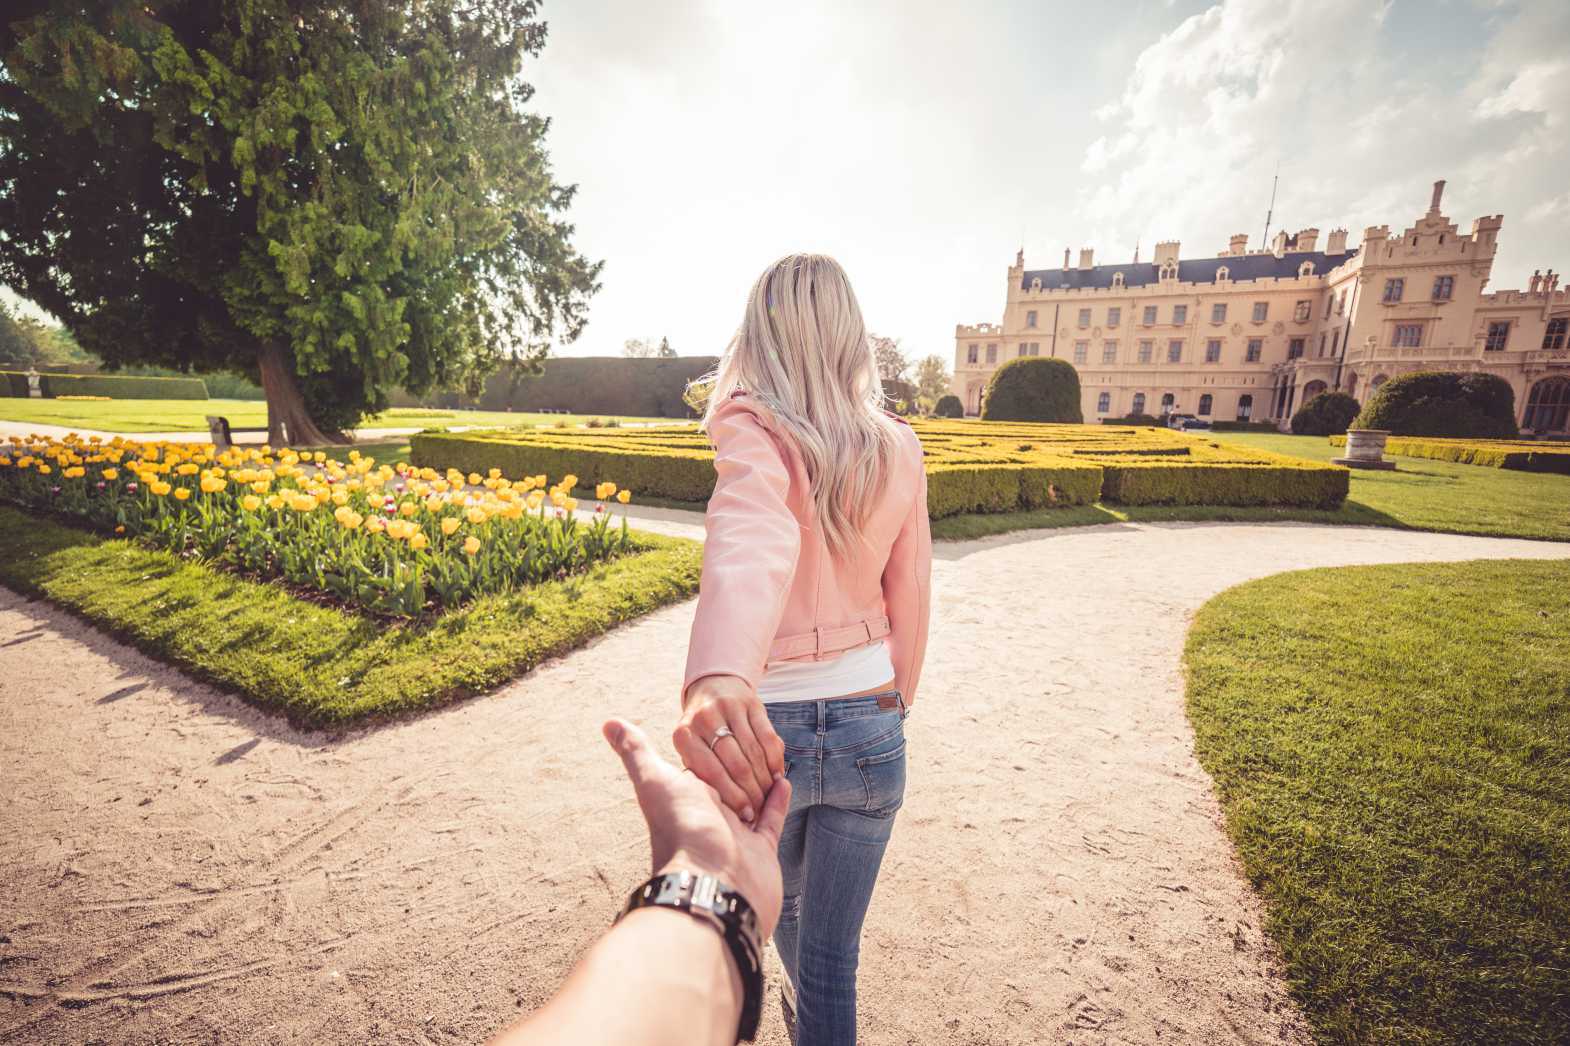 Free stock photo of Young Couple Enjoys Walking in Chateau Garden #followmeto from picjumbo.com